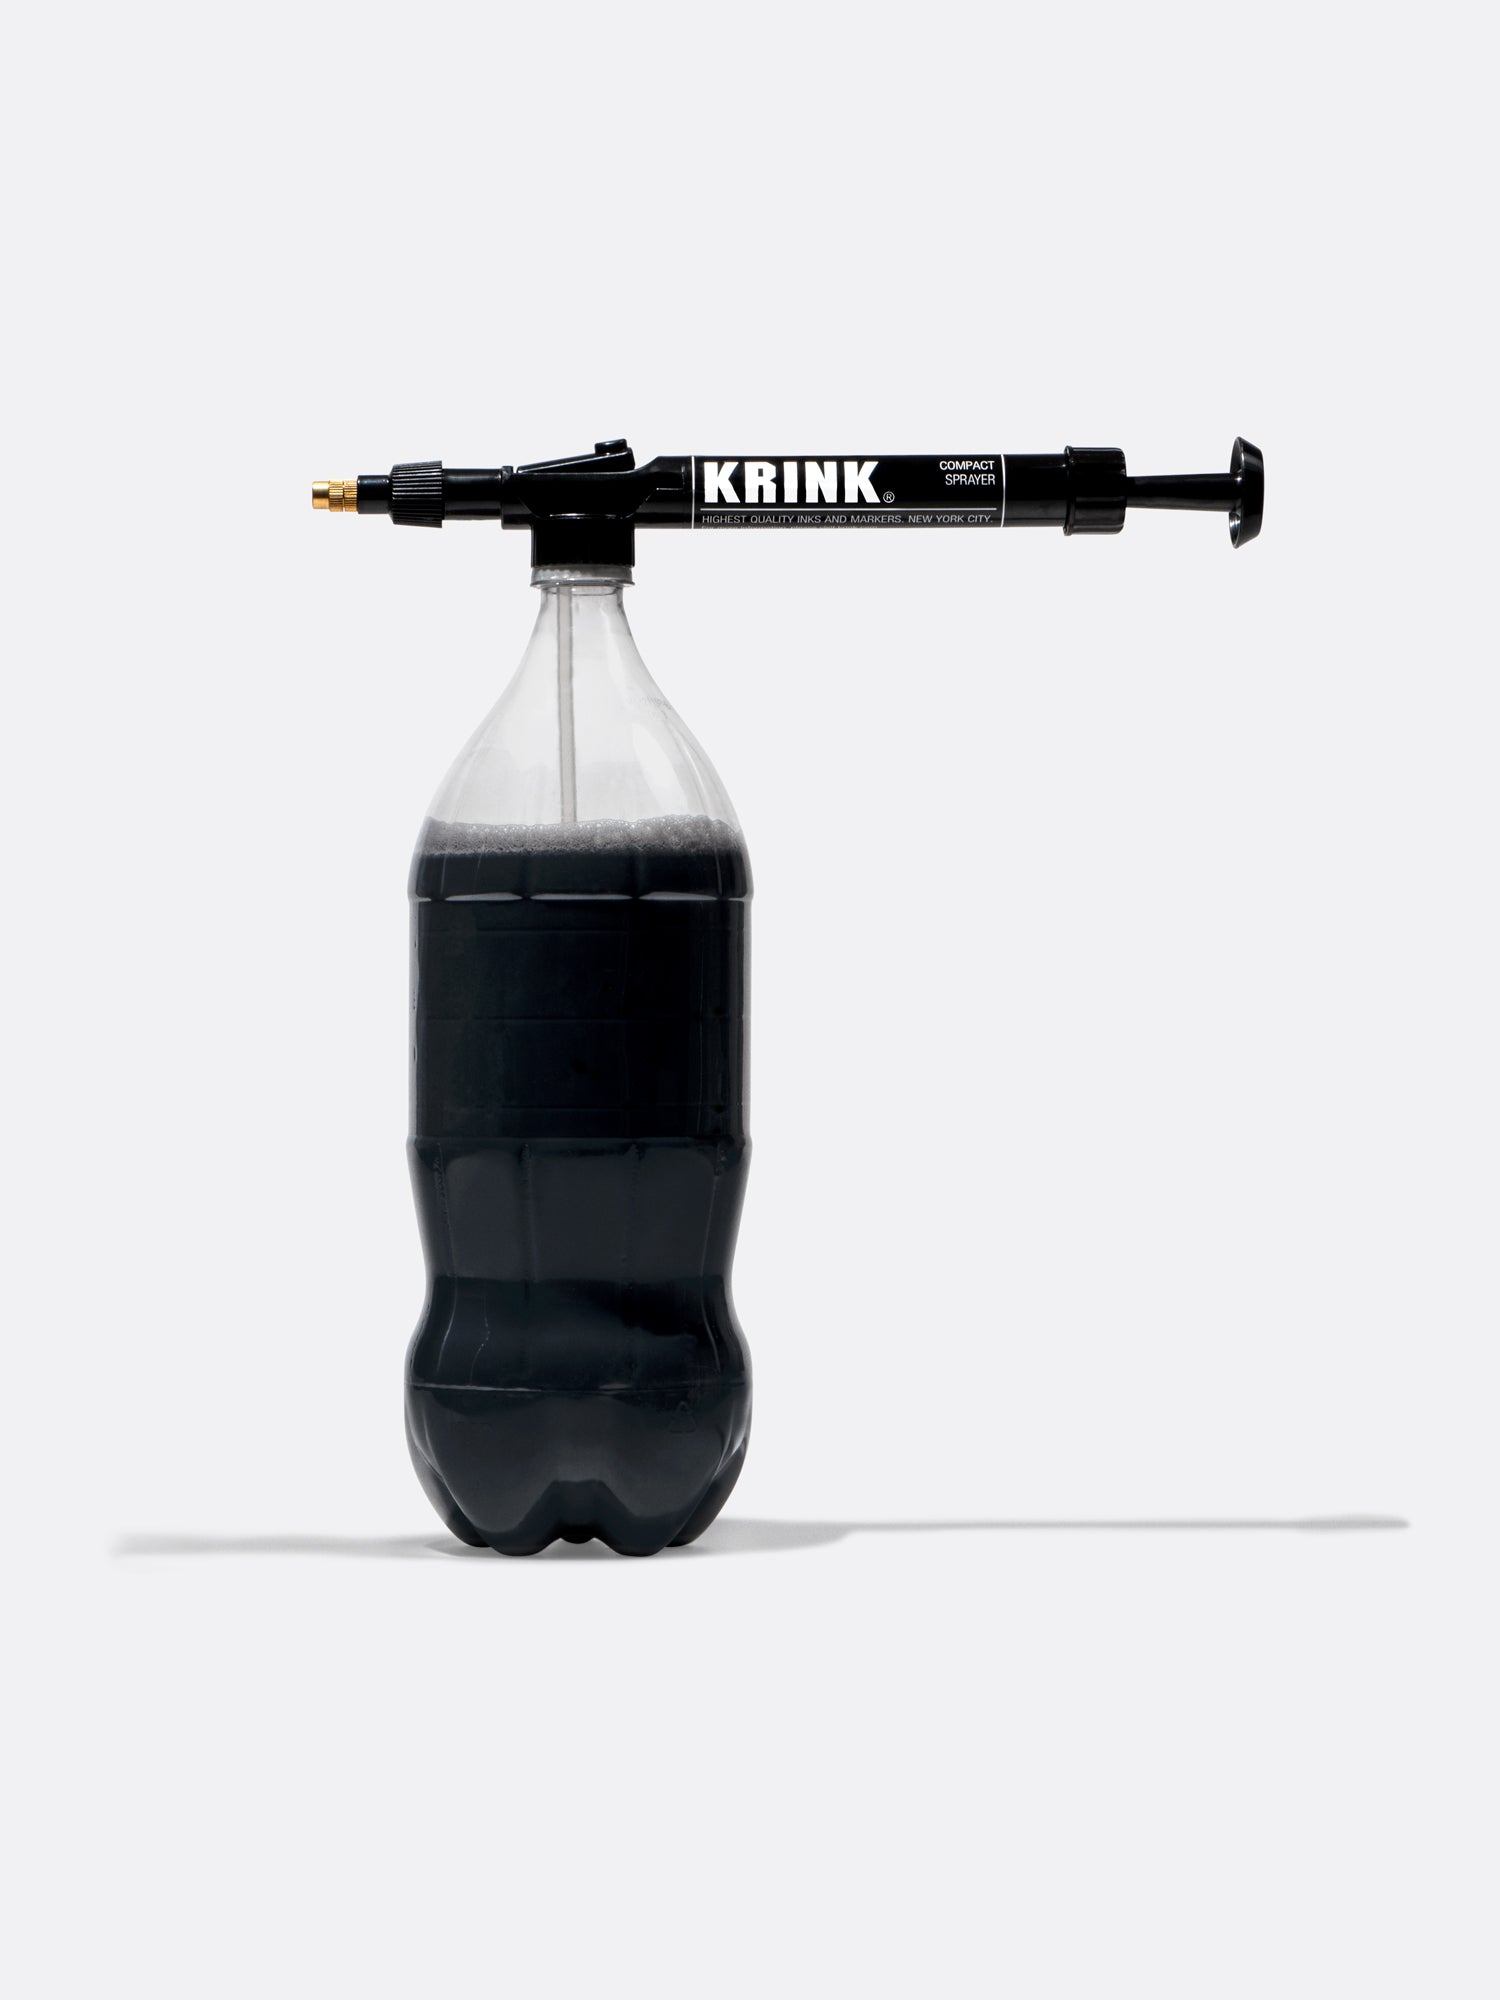 Buy Krink Sprayer Online